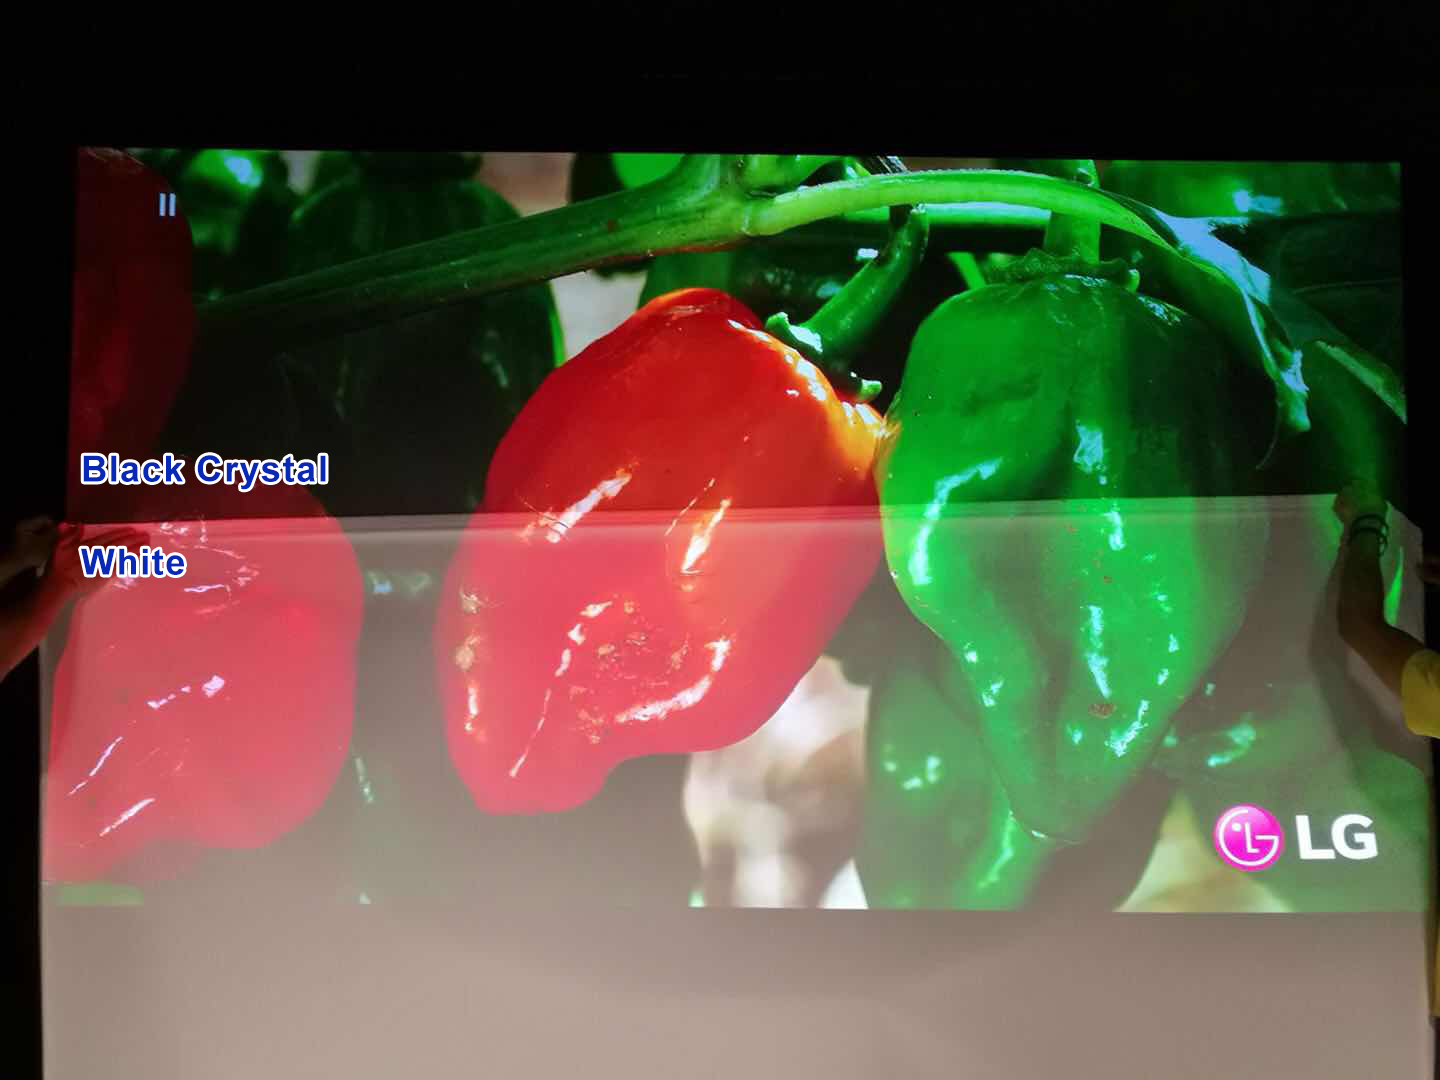 XY Screens ambient rejecting slim ambient light projector screen bezel